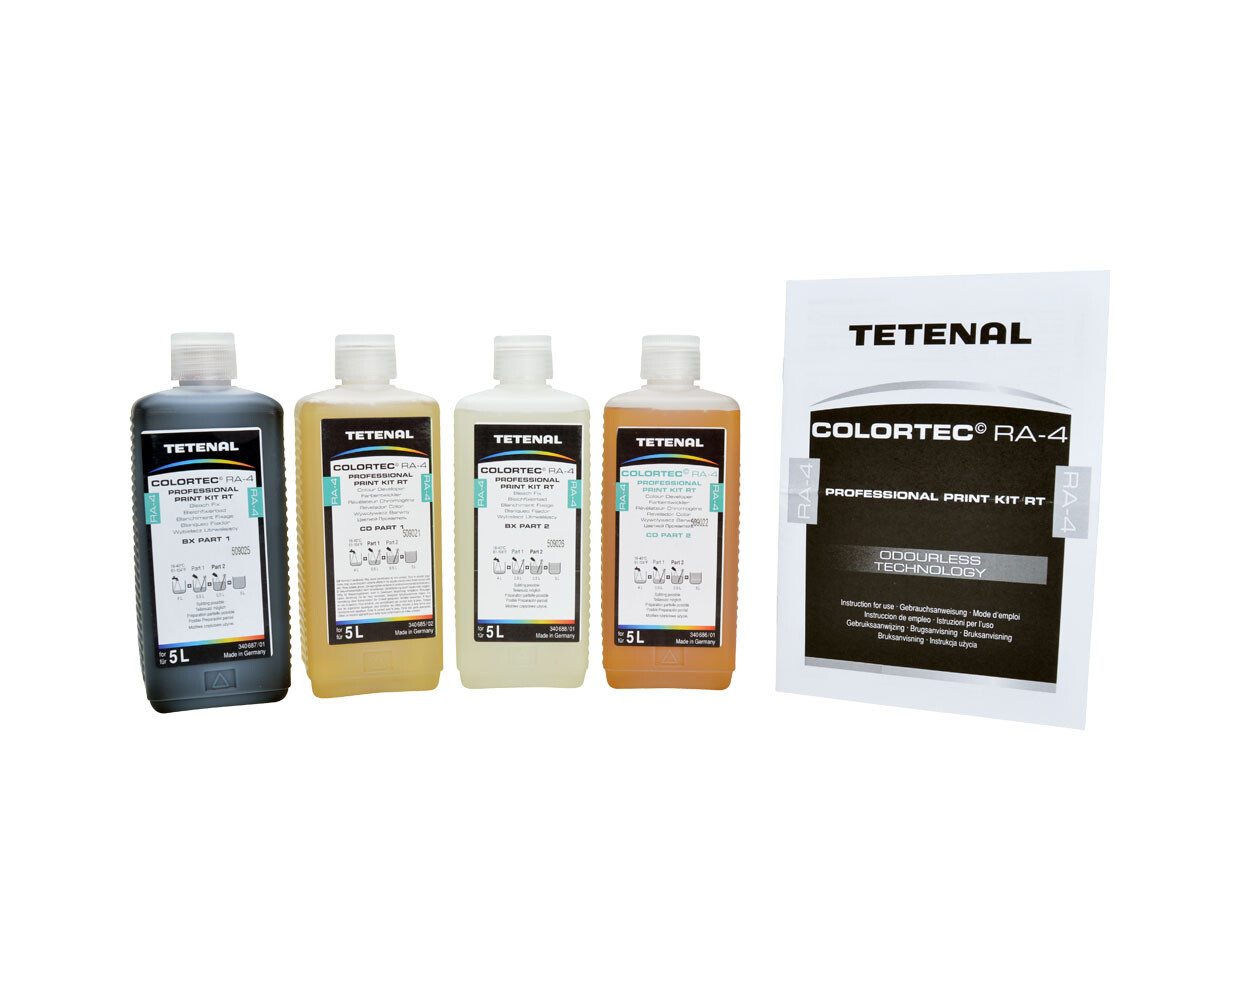 Tetenal Colortec© RA-4 Professional Print Kit RT for 5 Liter (102124)